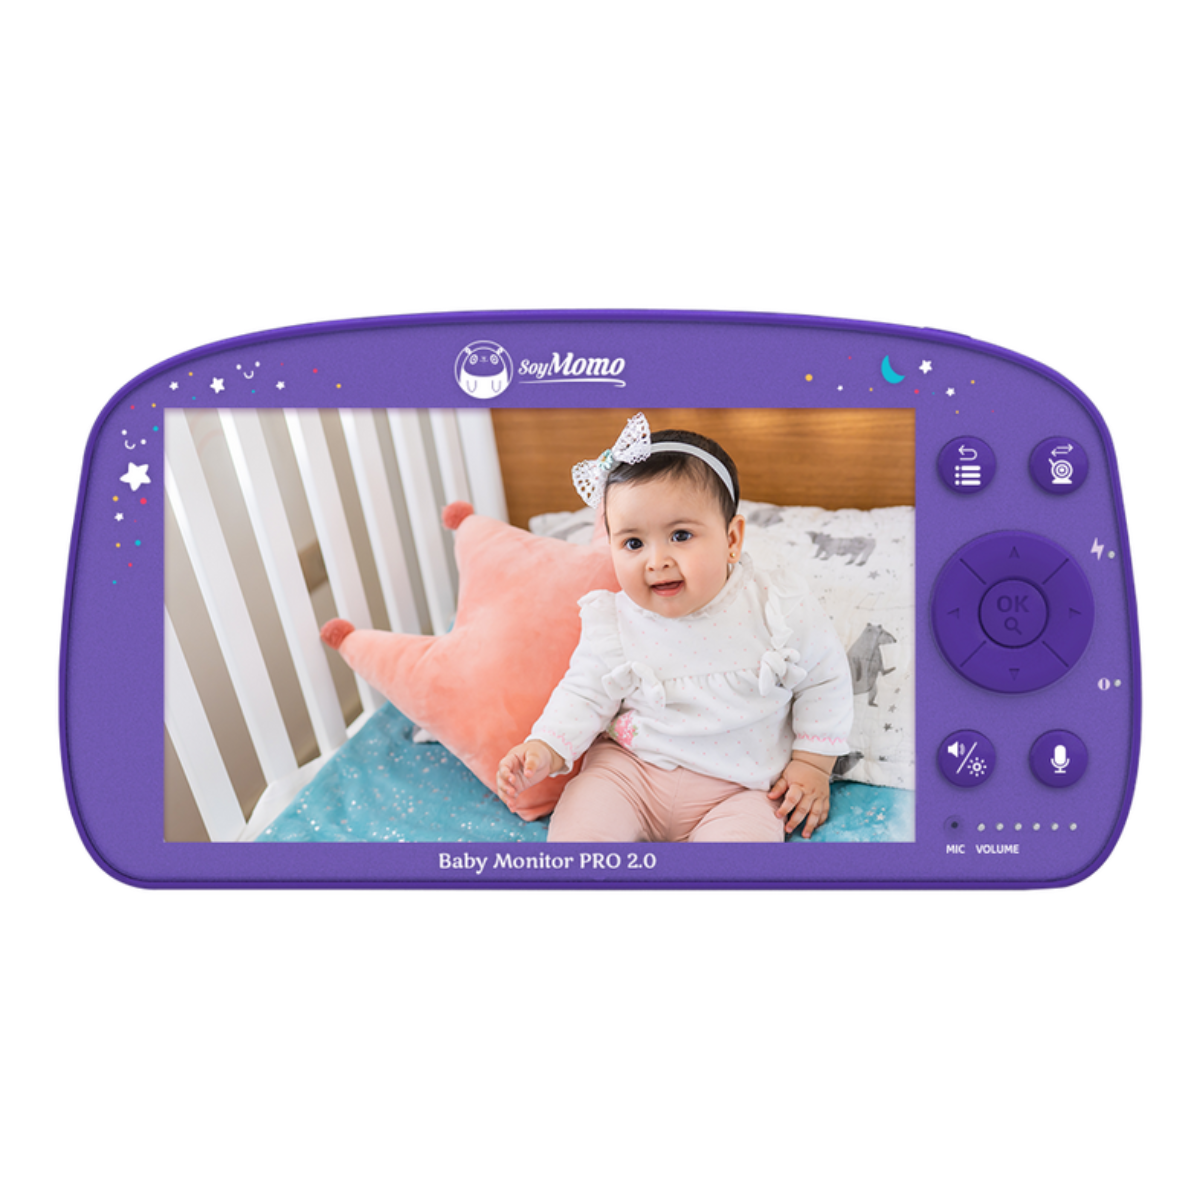 Monitor Pro 2.0 SOYMOMO Baby Babyphone